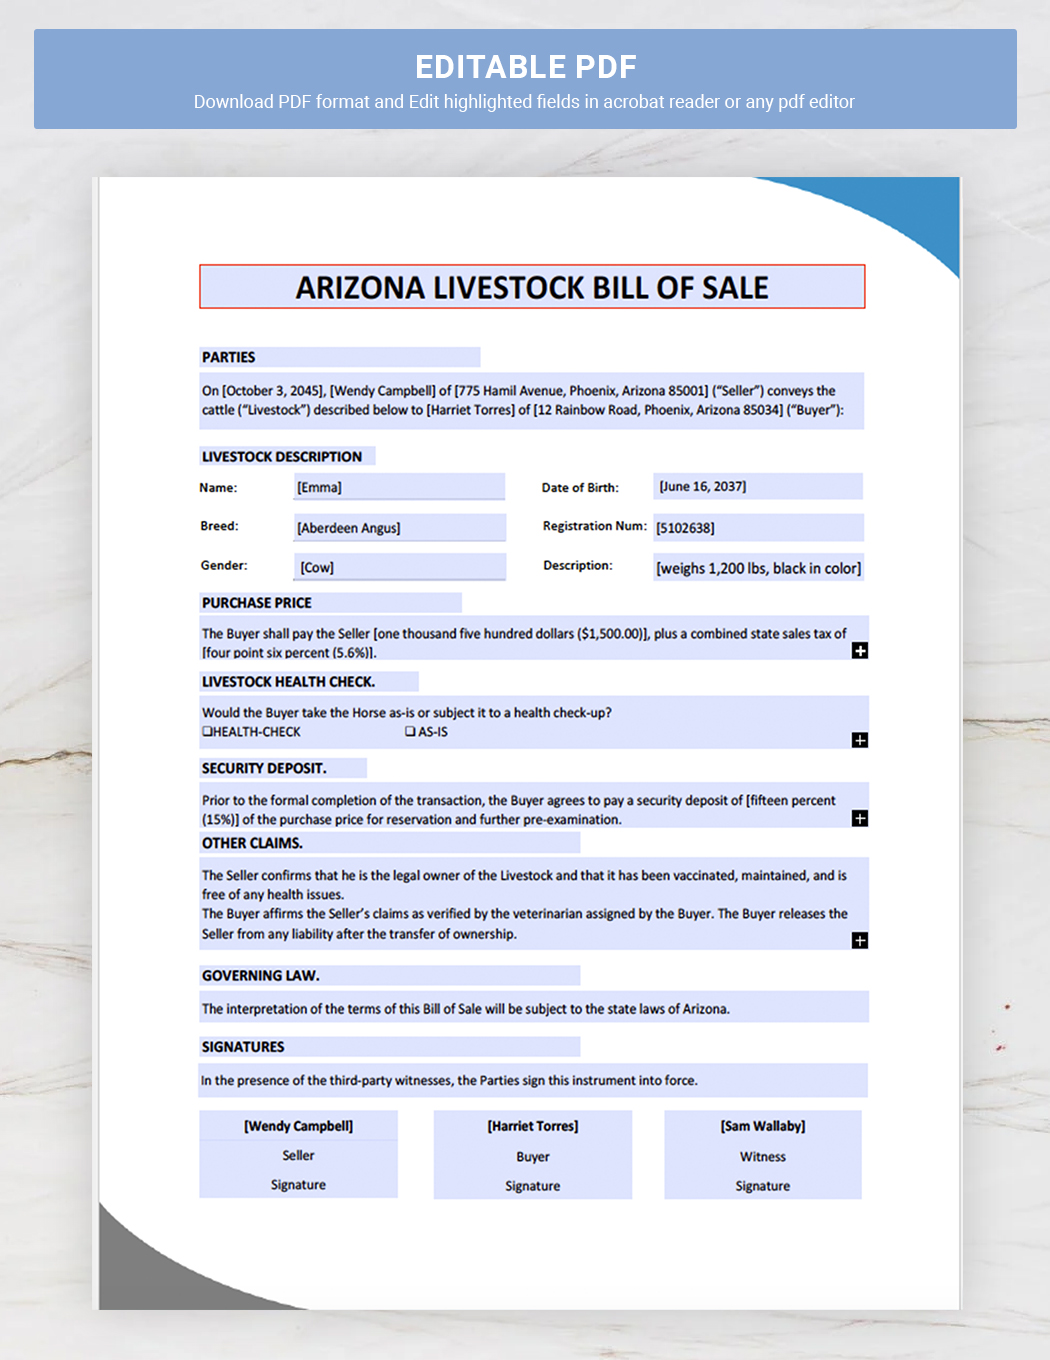 Arizona Livestock Bill of Sale Form Template